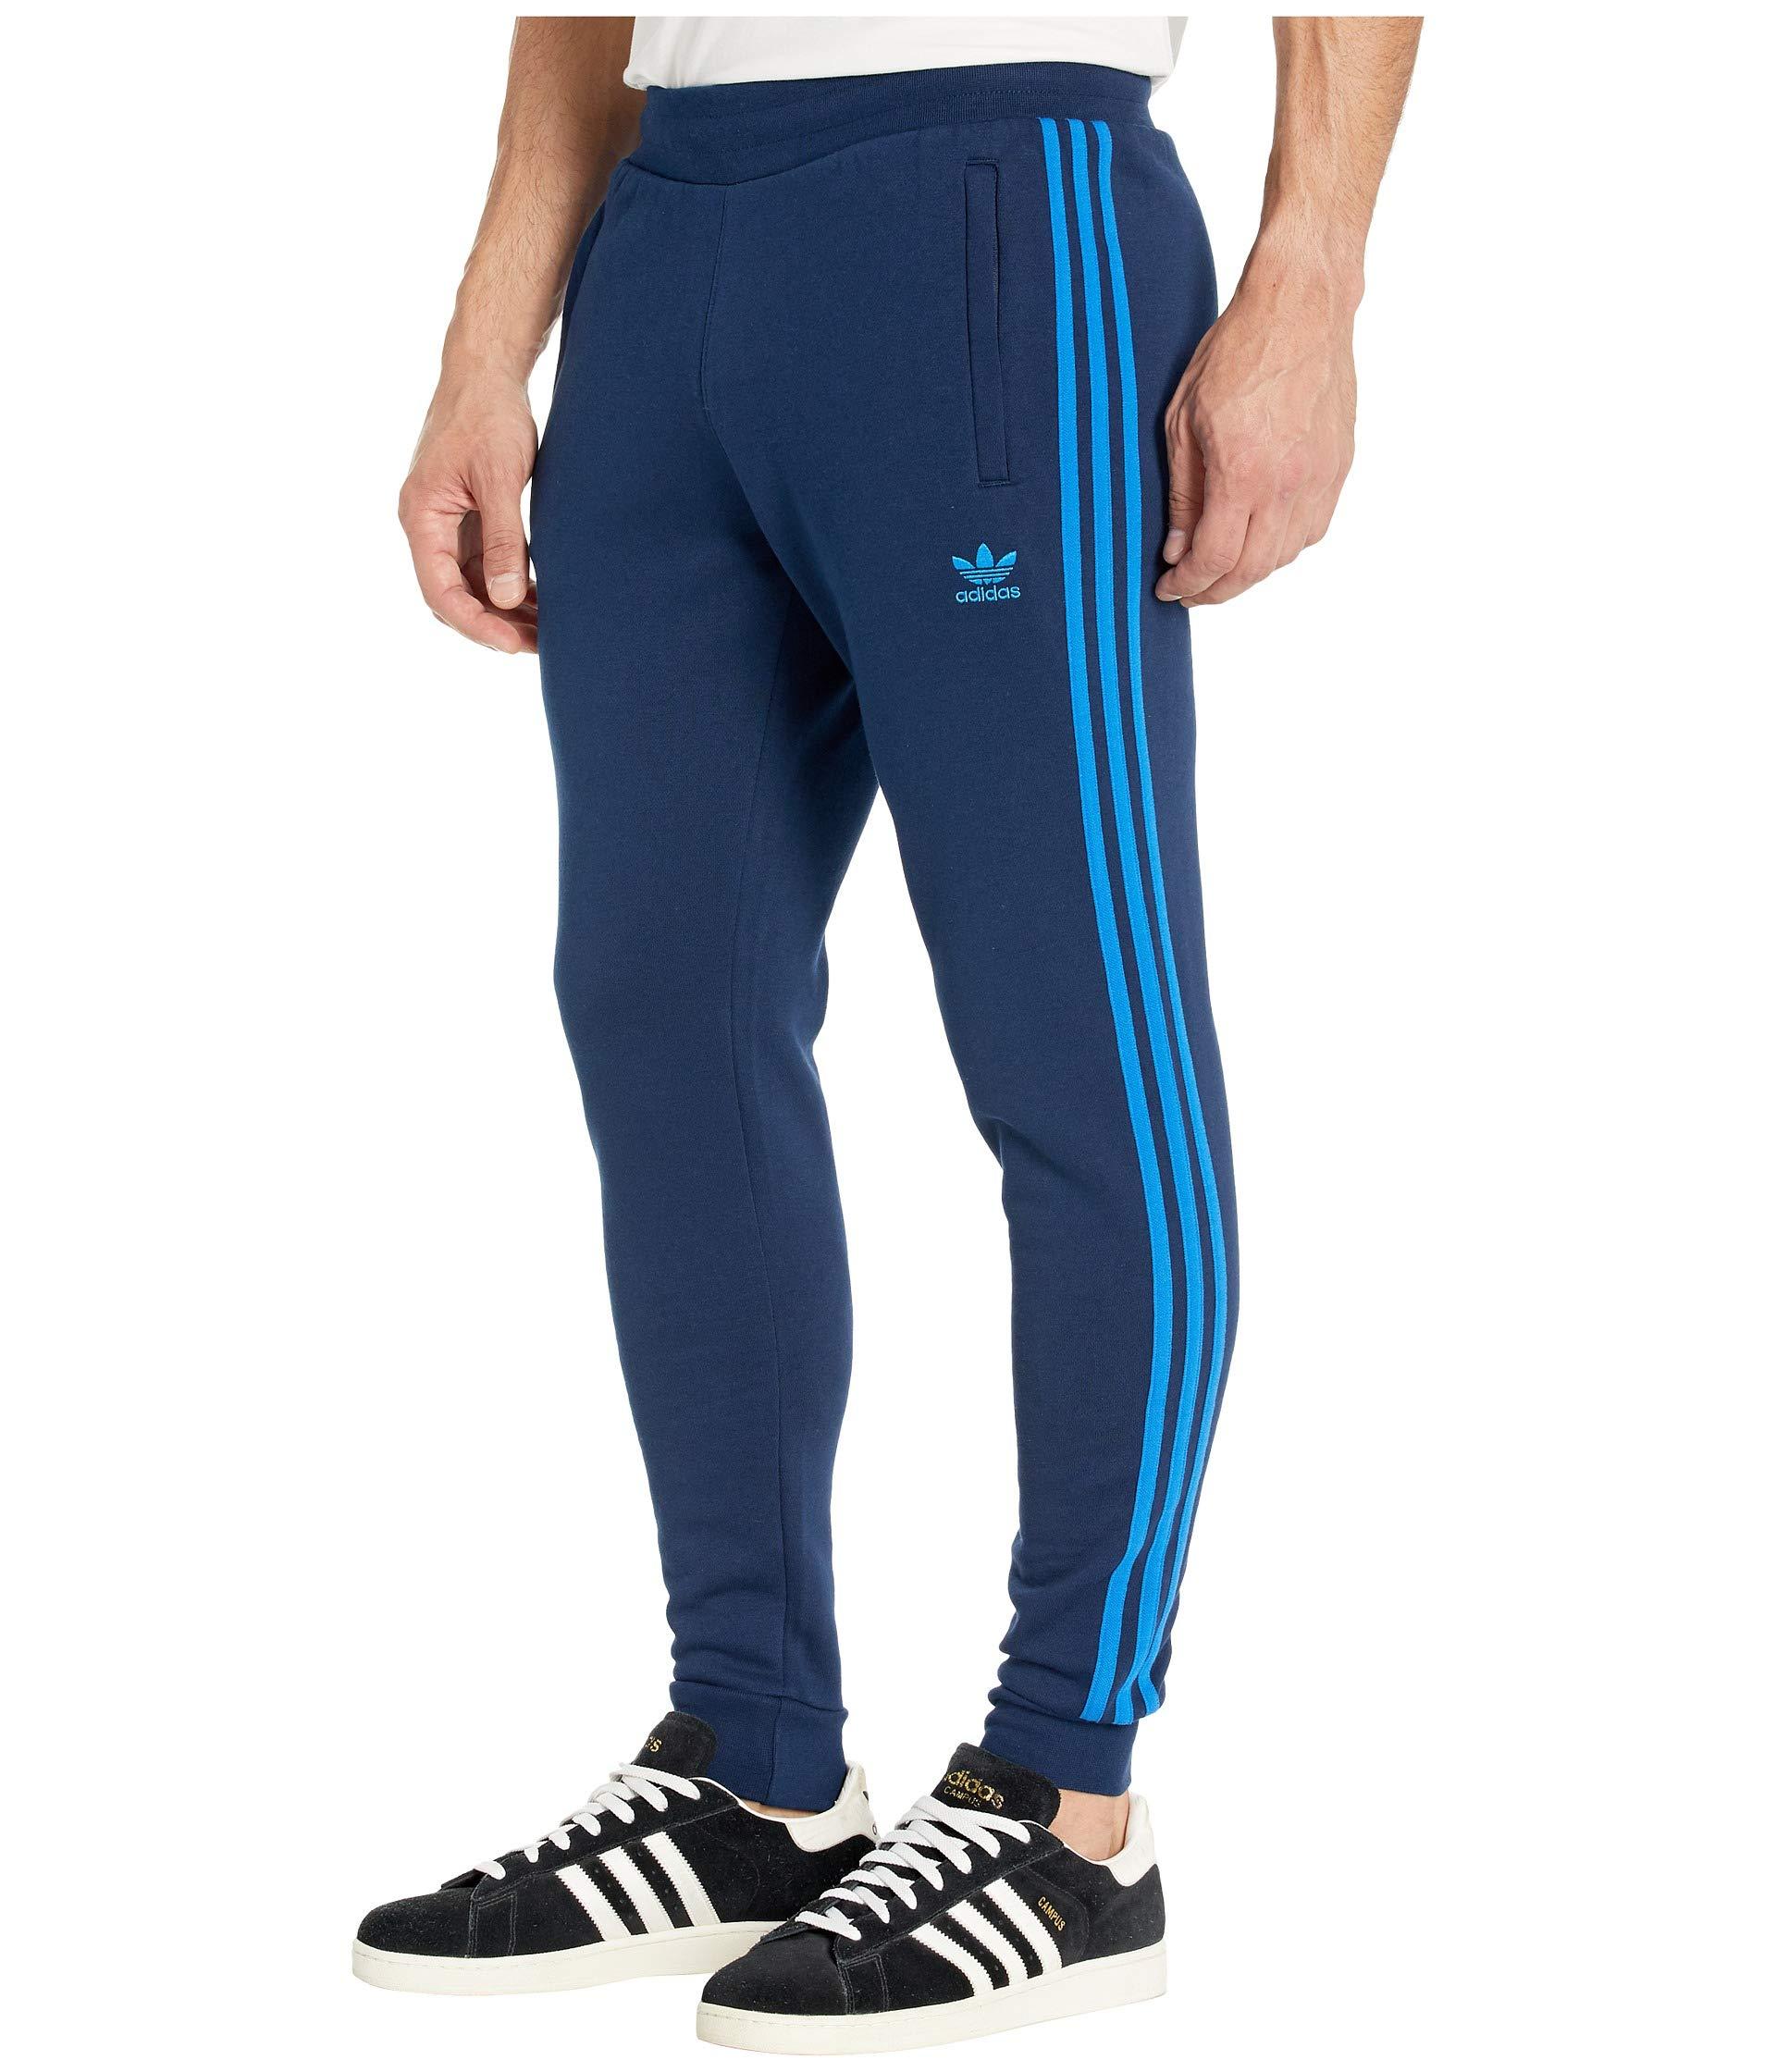 adidas Originals Cotton 3-stripes Pants in Navy (Blue) for Men - Lyst